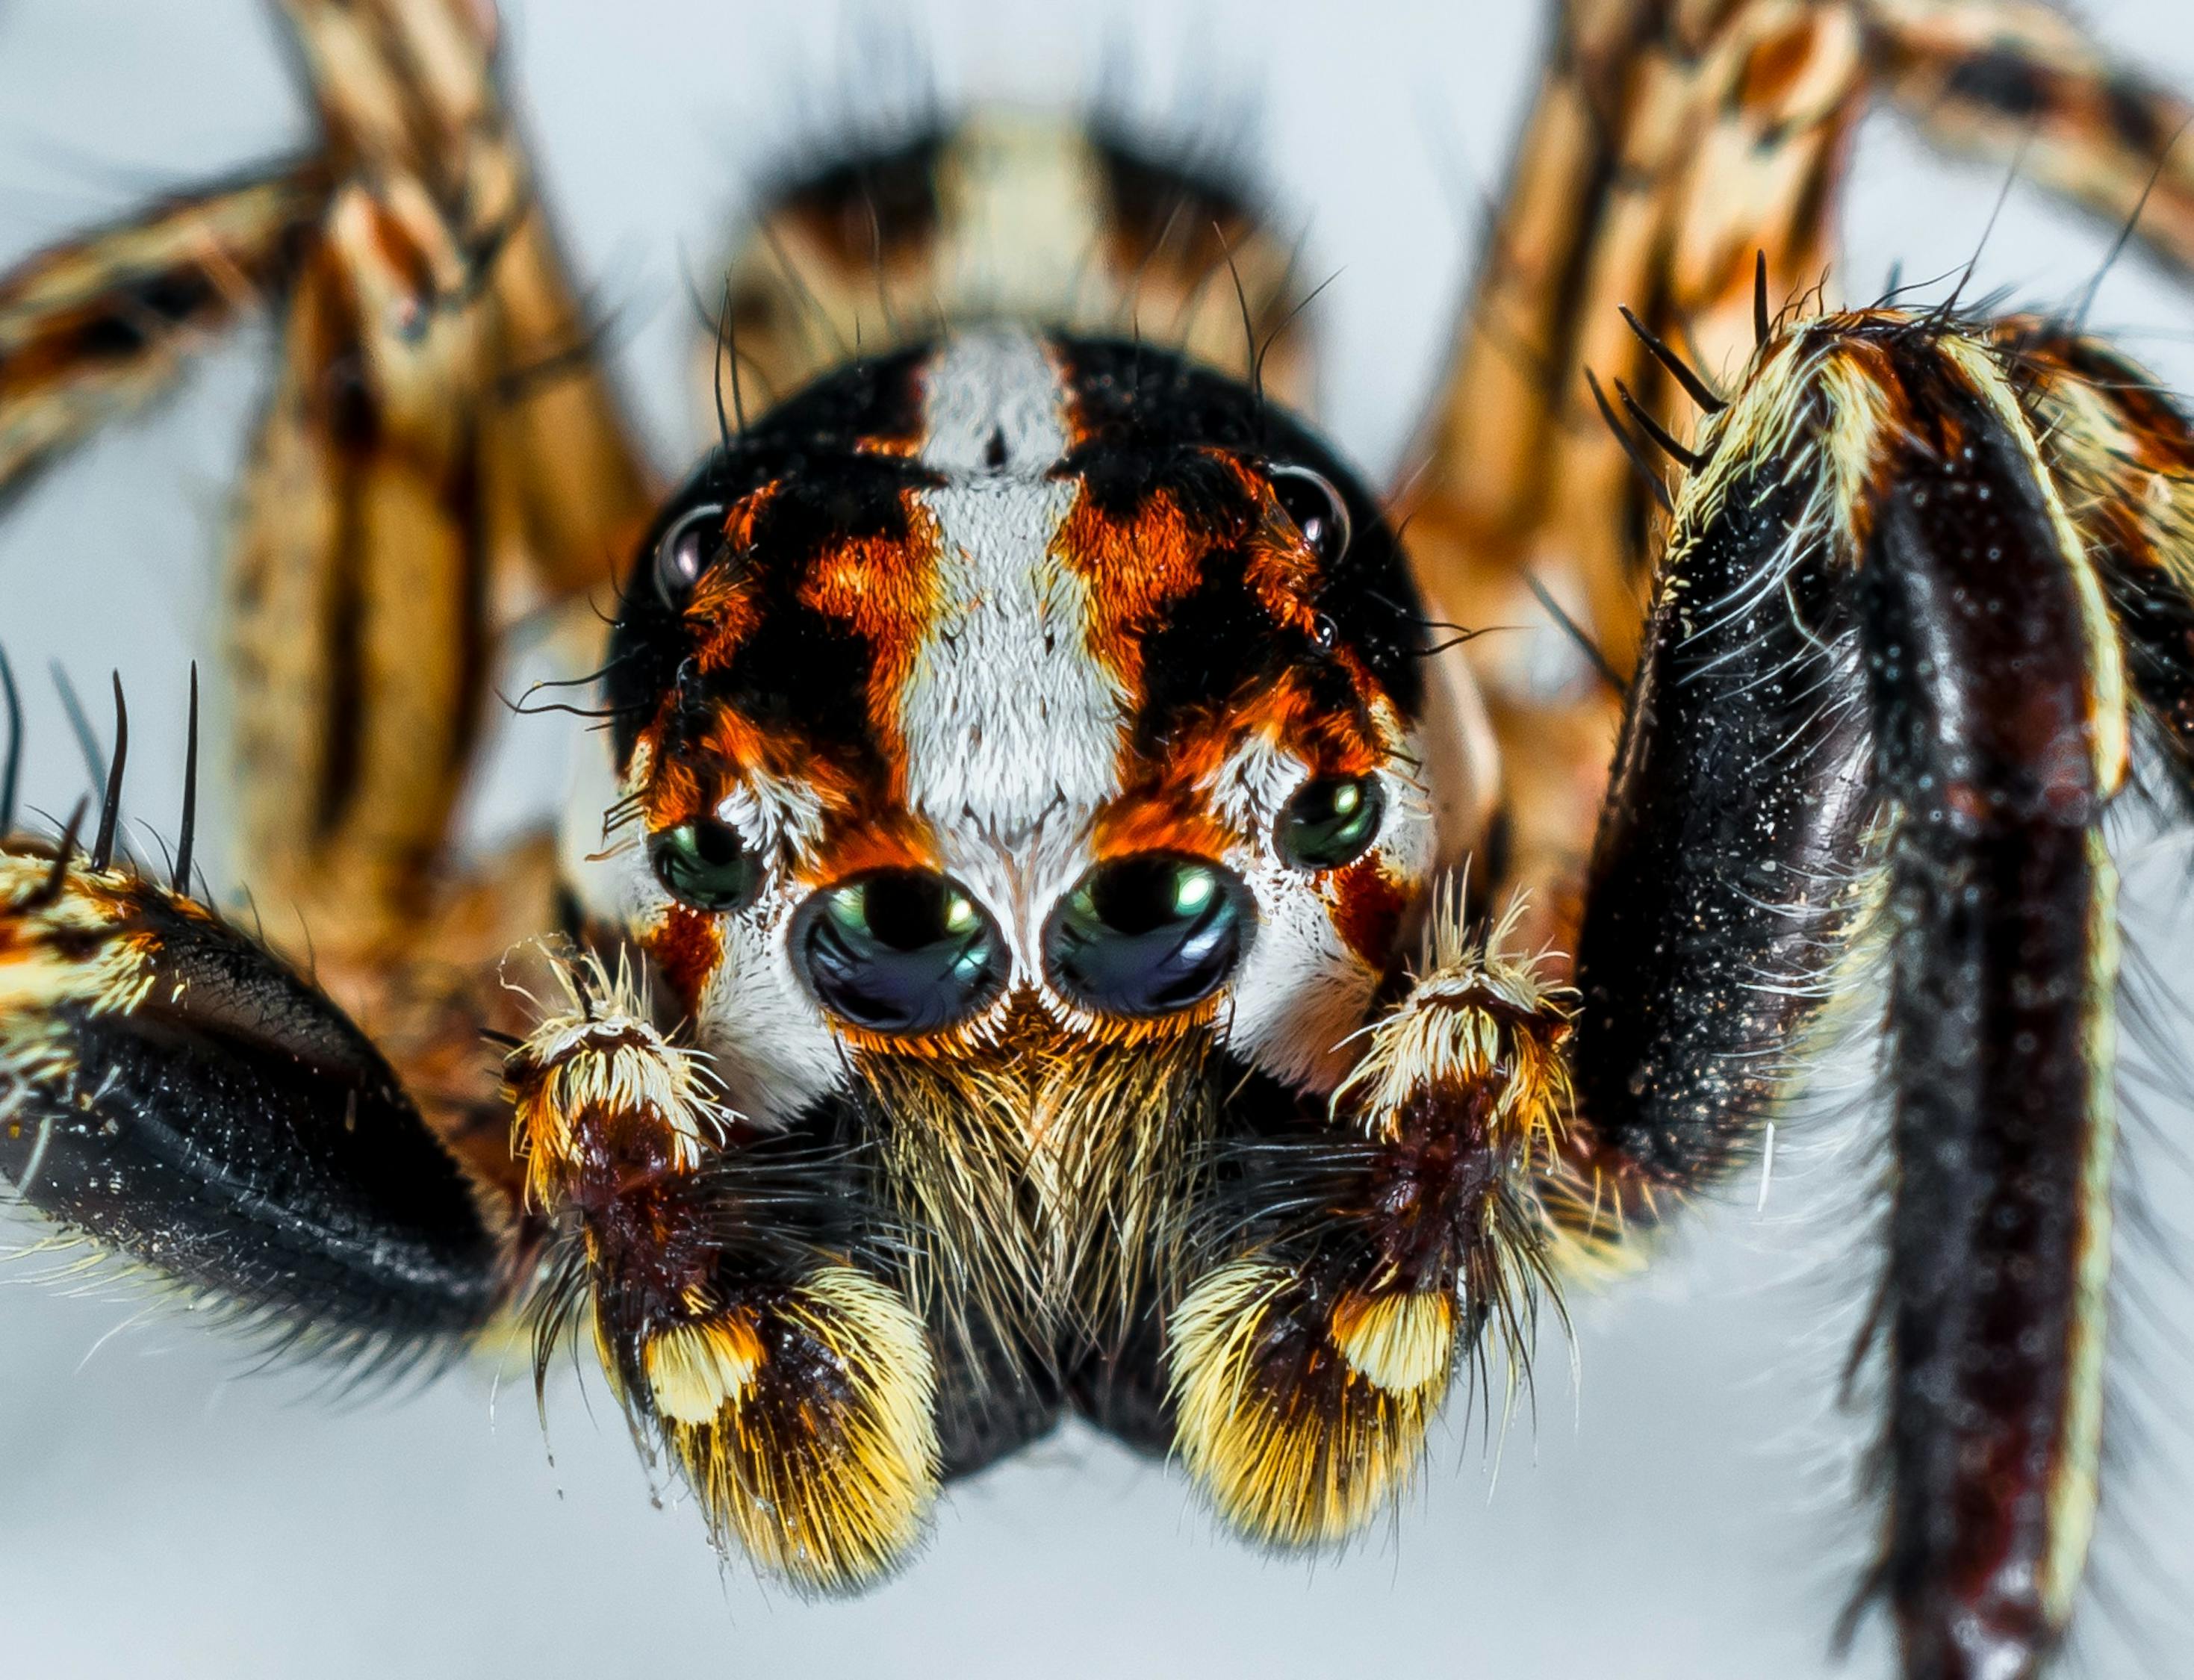 brazilian wandering spider live